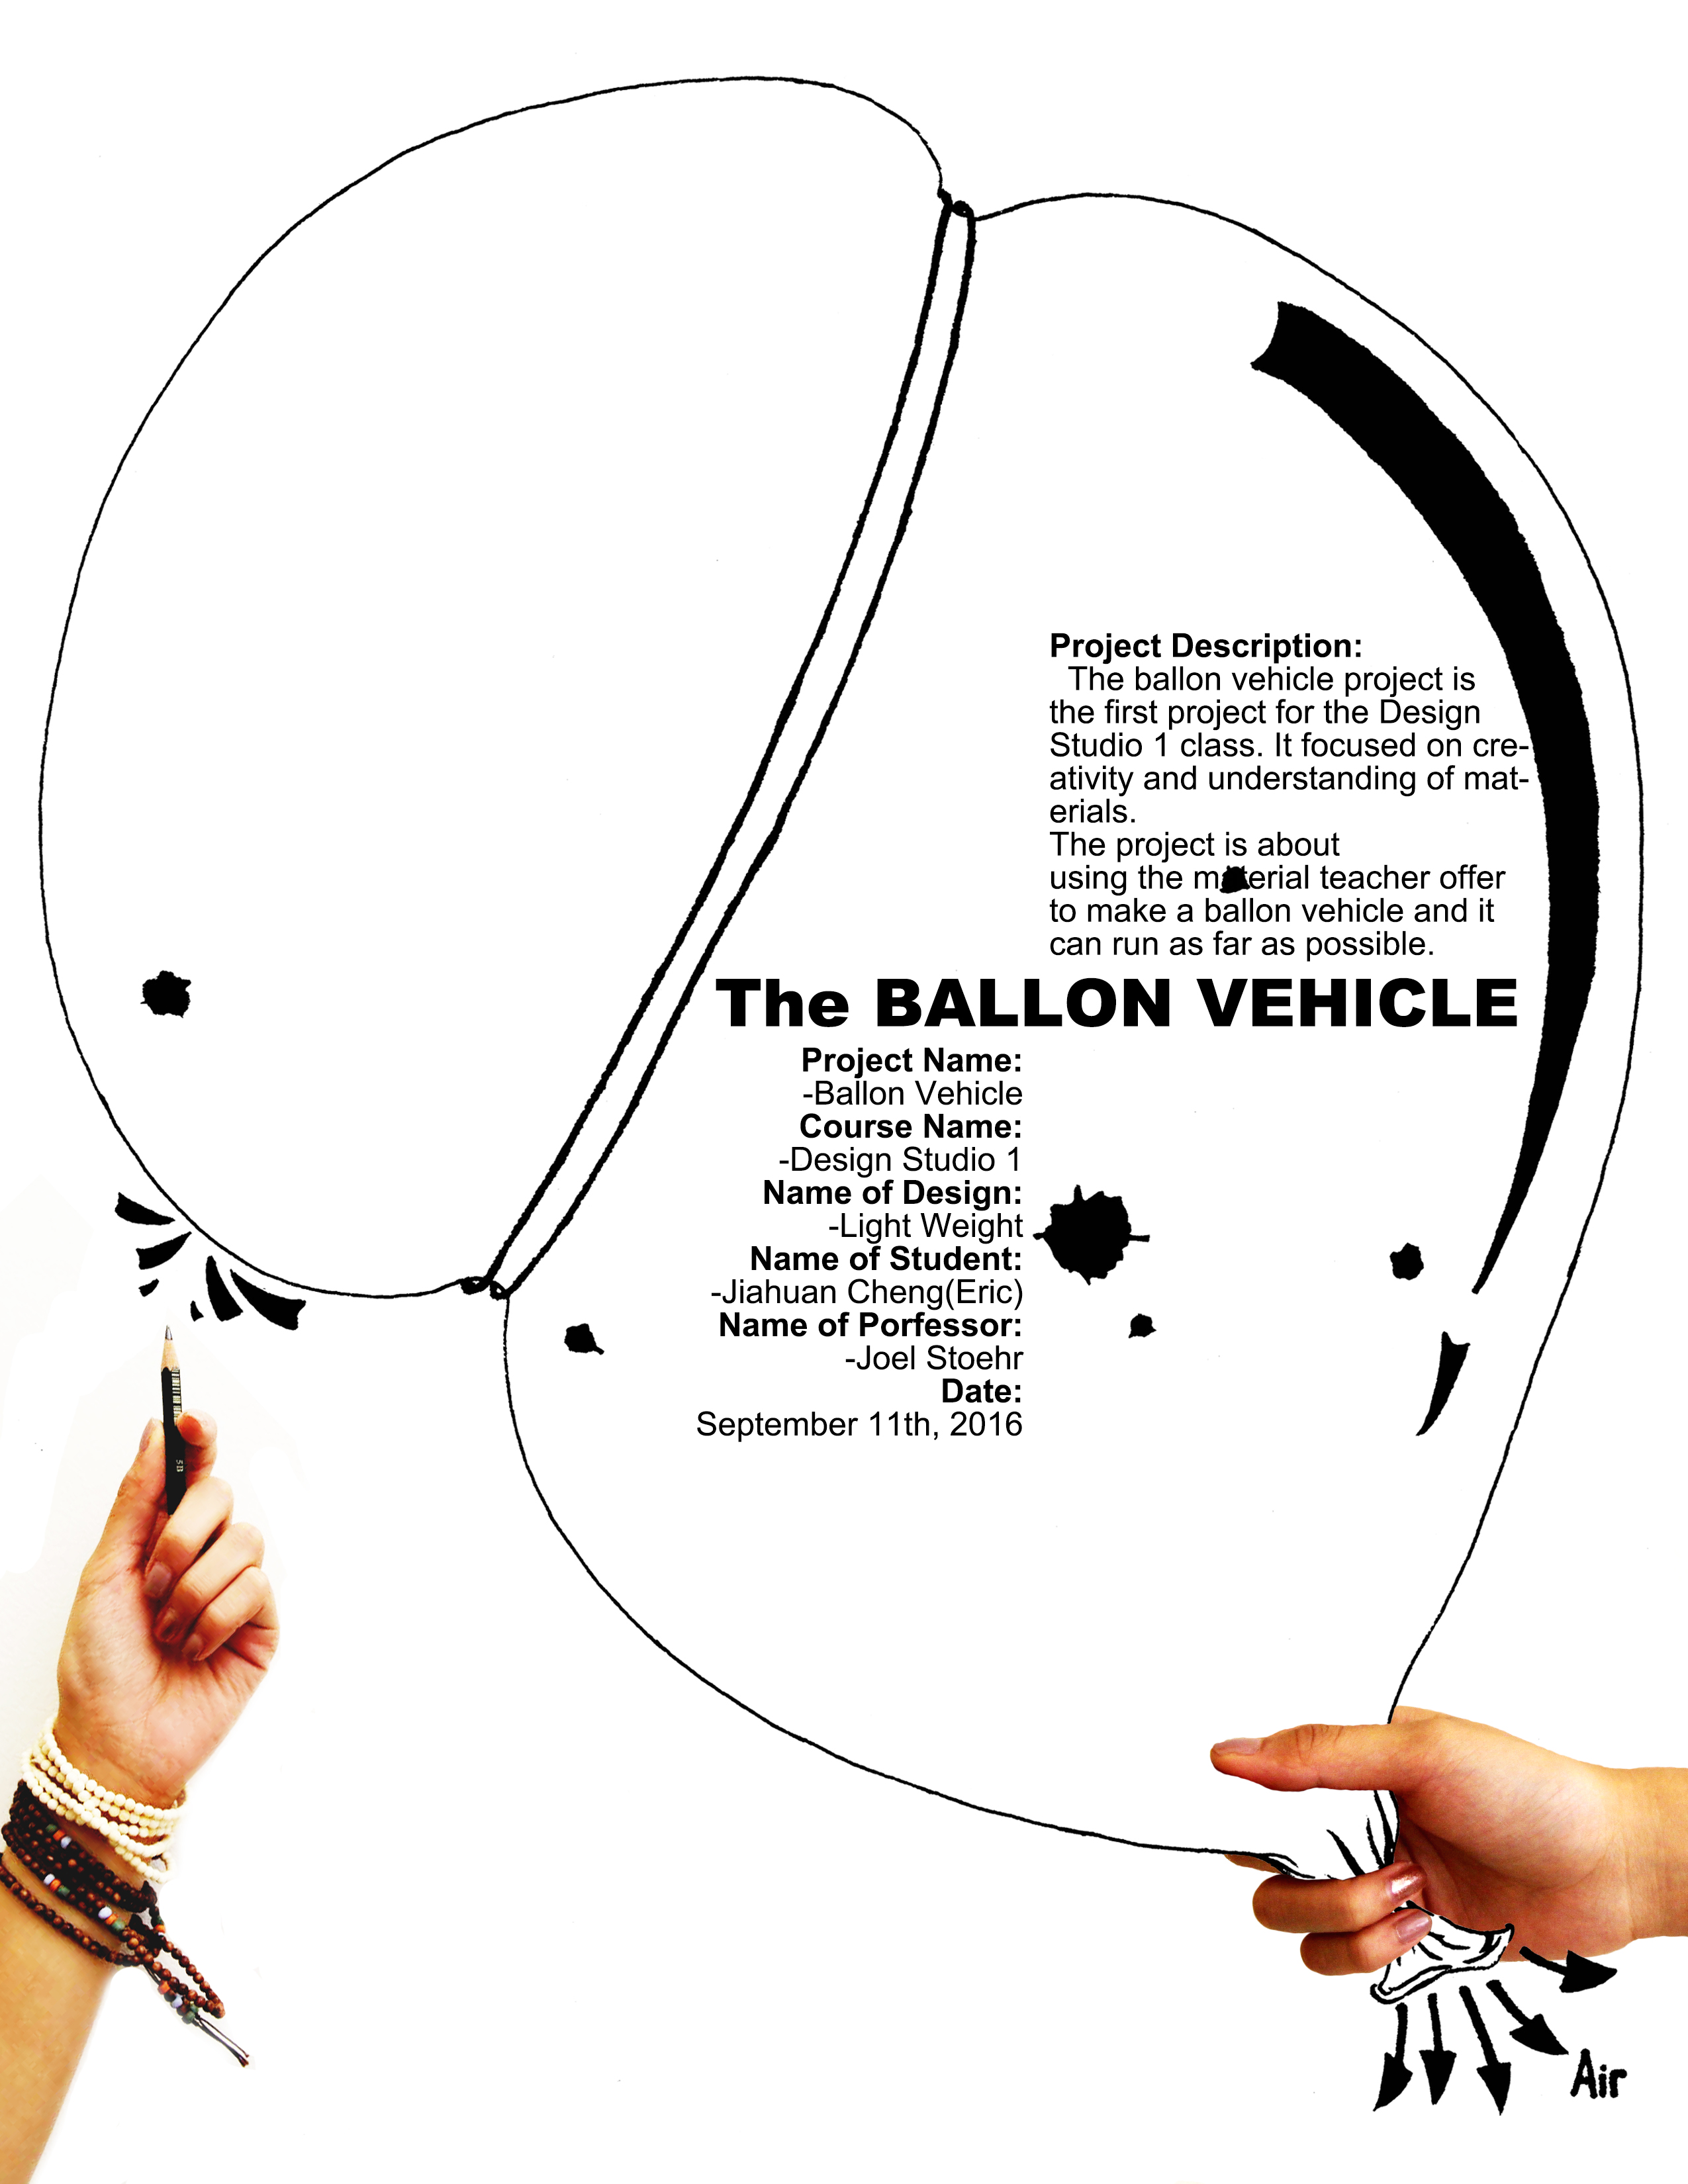 [PUPD 2010] DESIGN STUDIO 1-Ballon Vehicle (Eric Cheng)